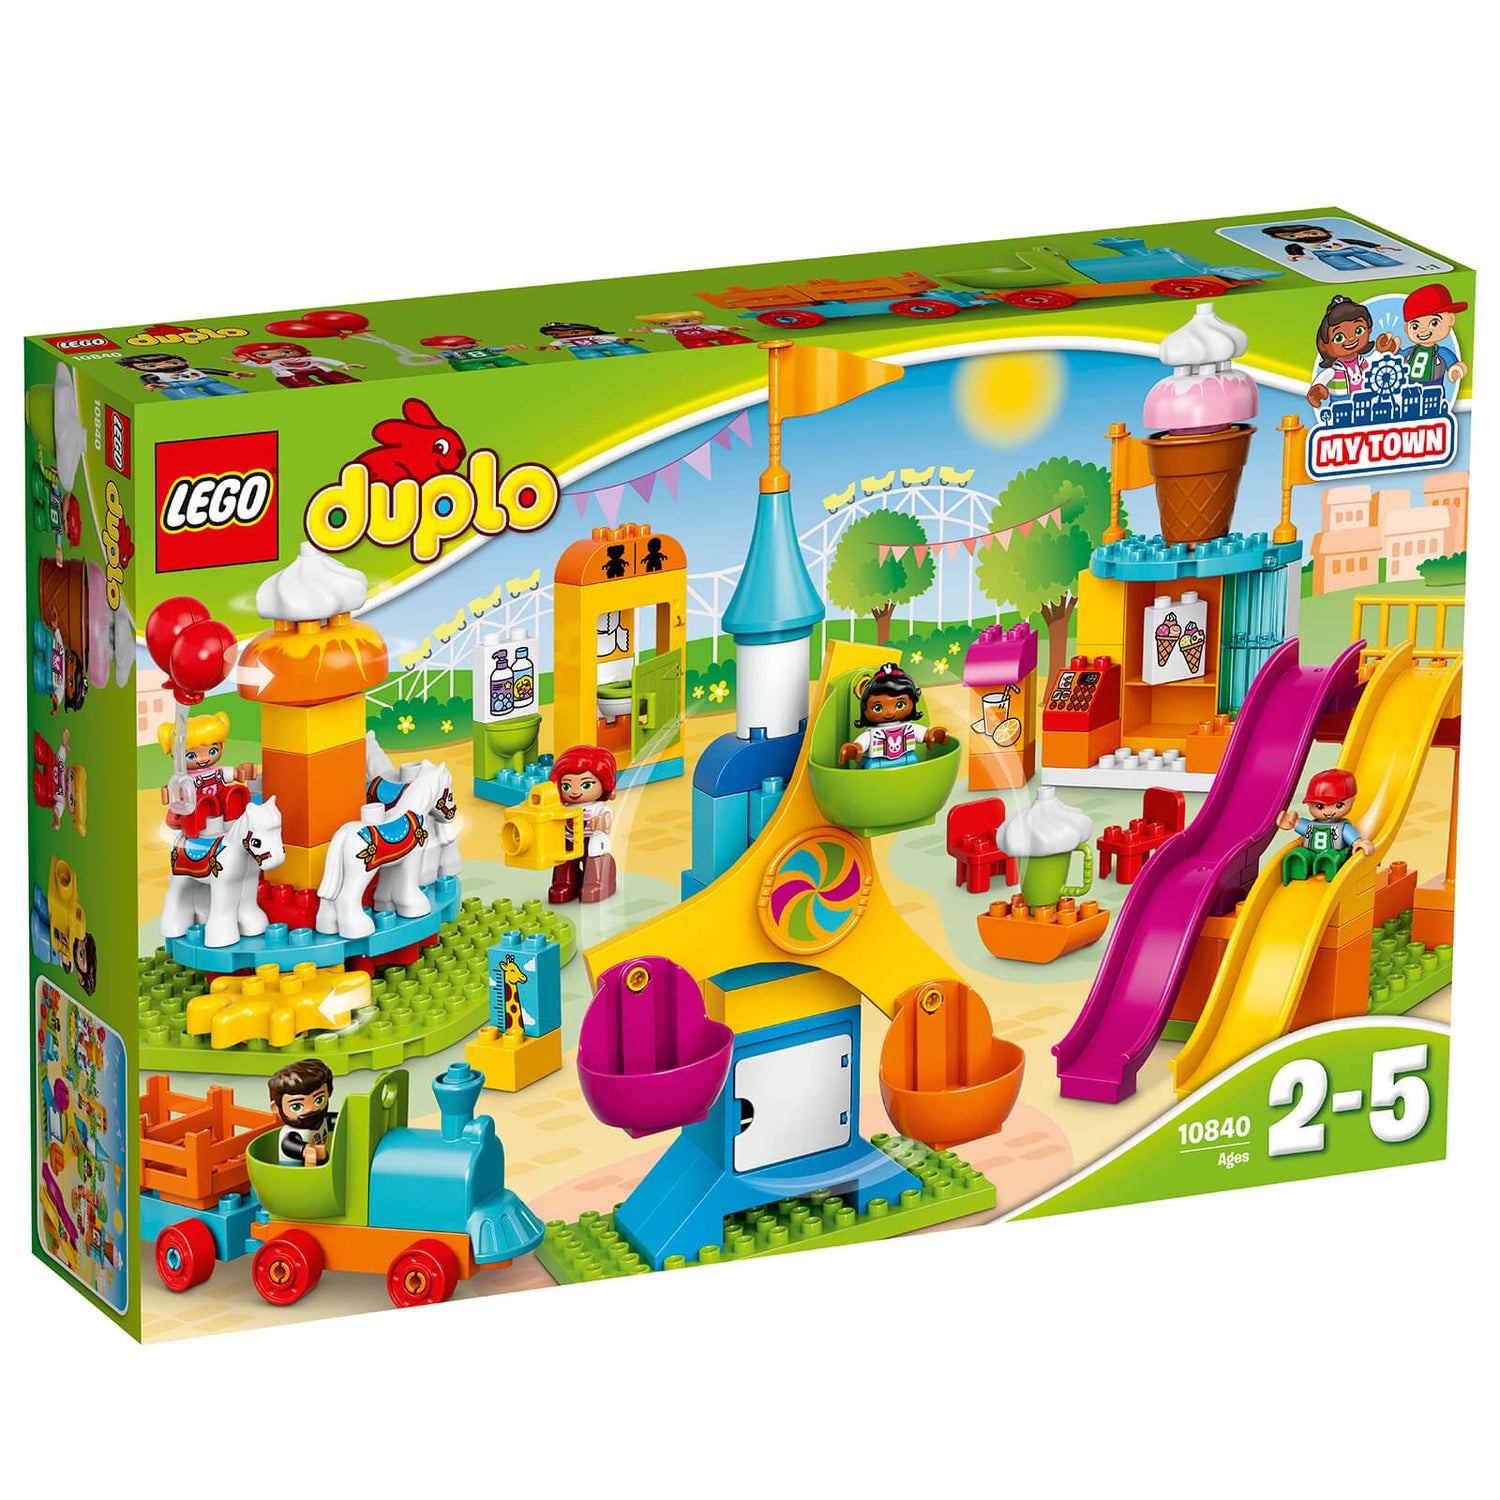 LEGO Duplo Town Big Fair Building Toy (10840)